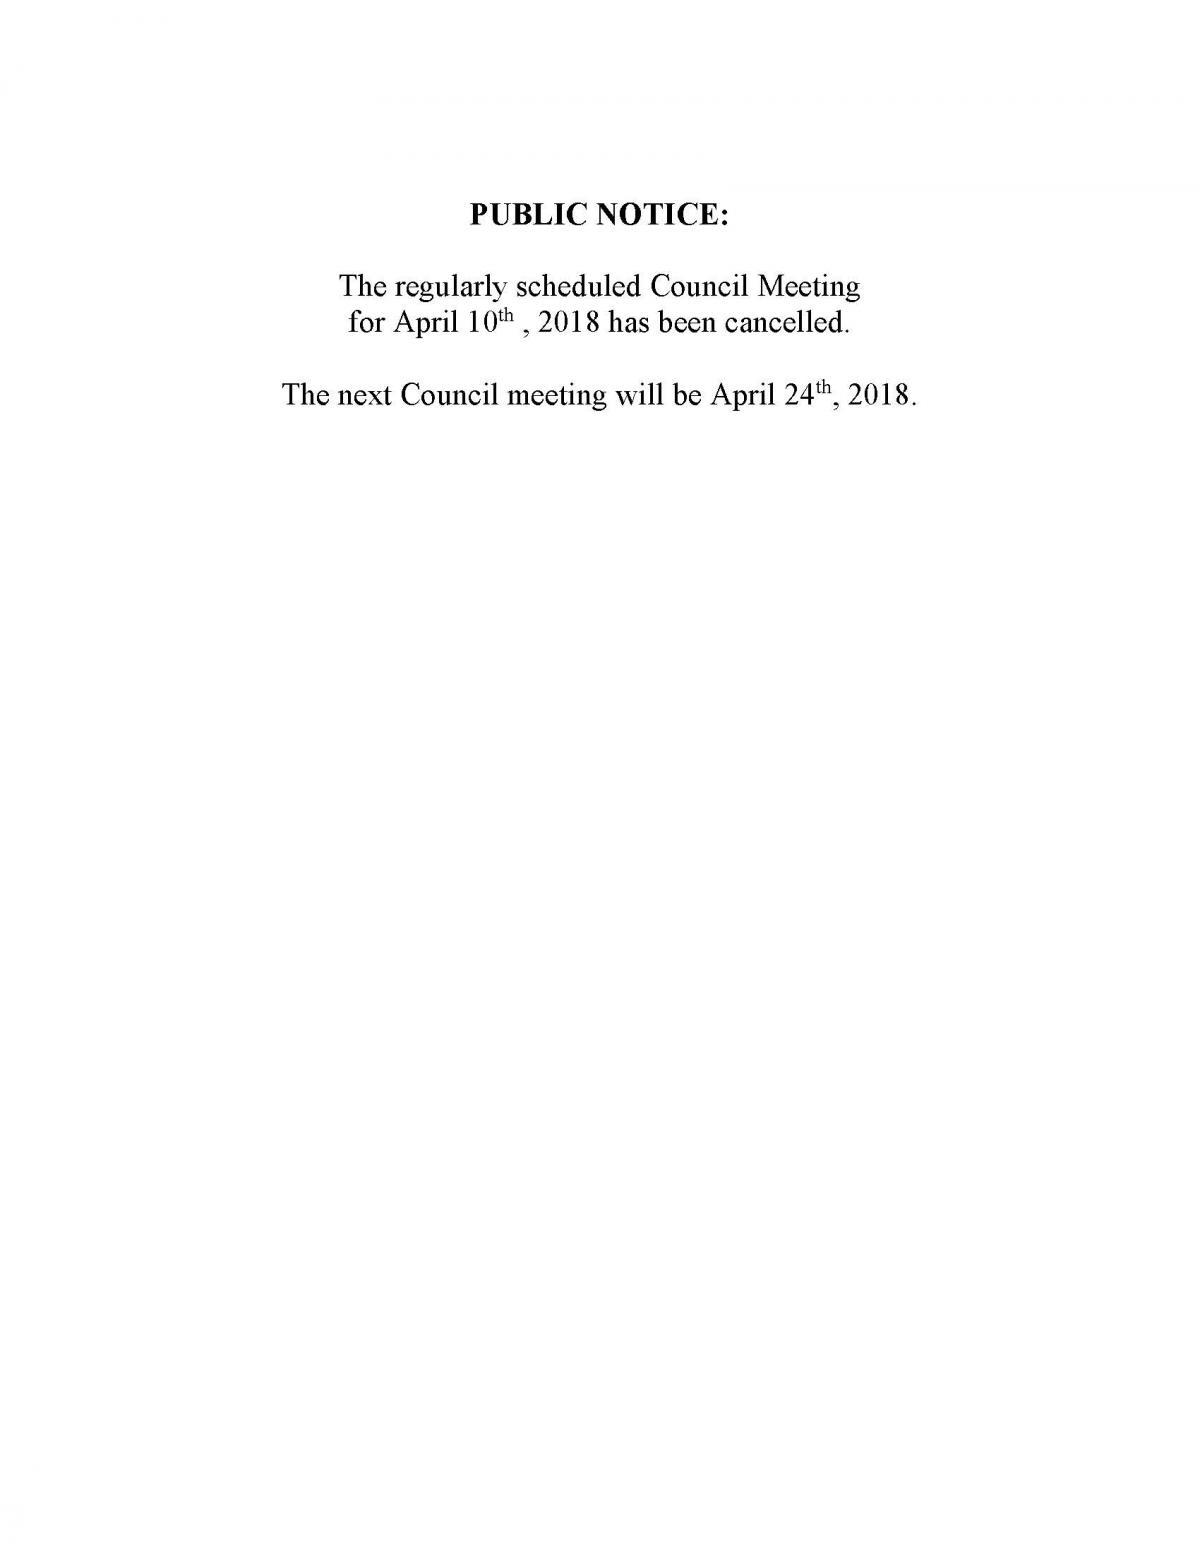 Public Notice - April 10th Council Meeting Cancelled